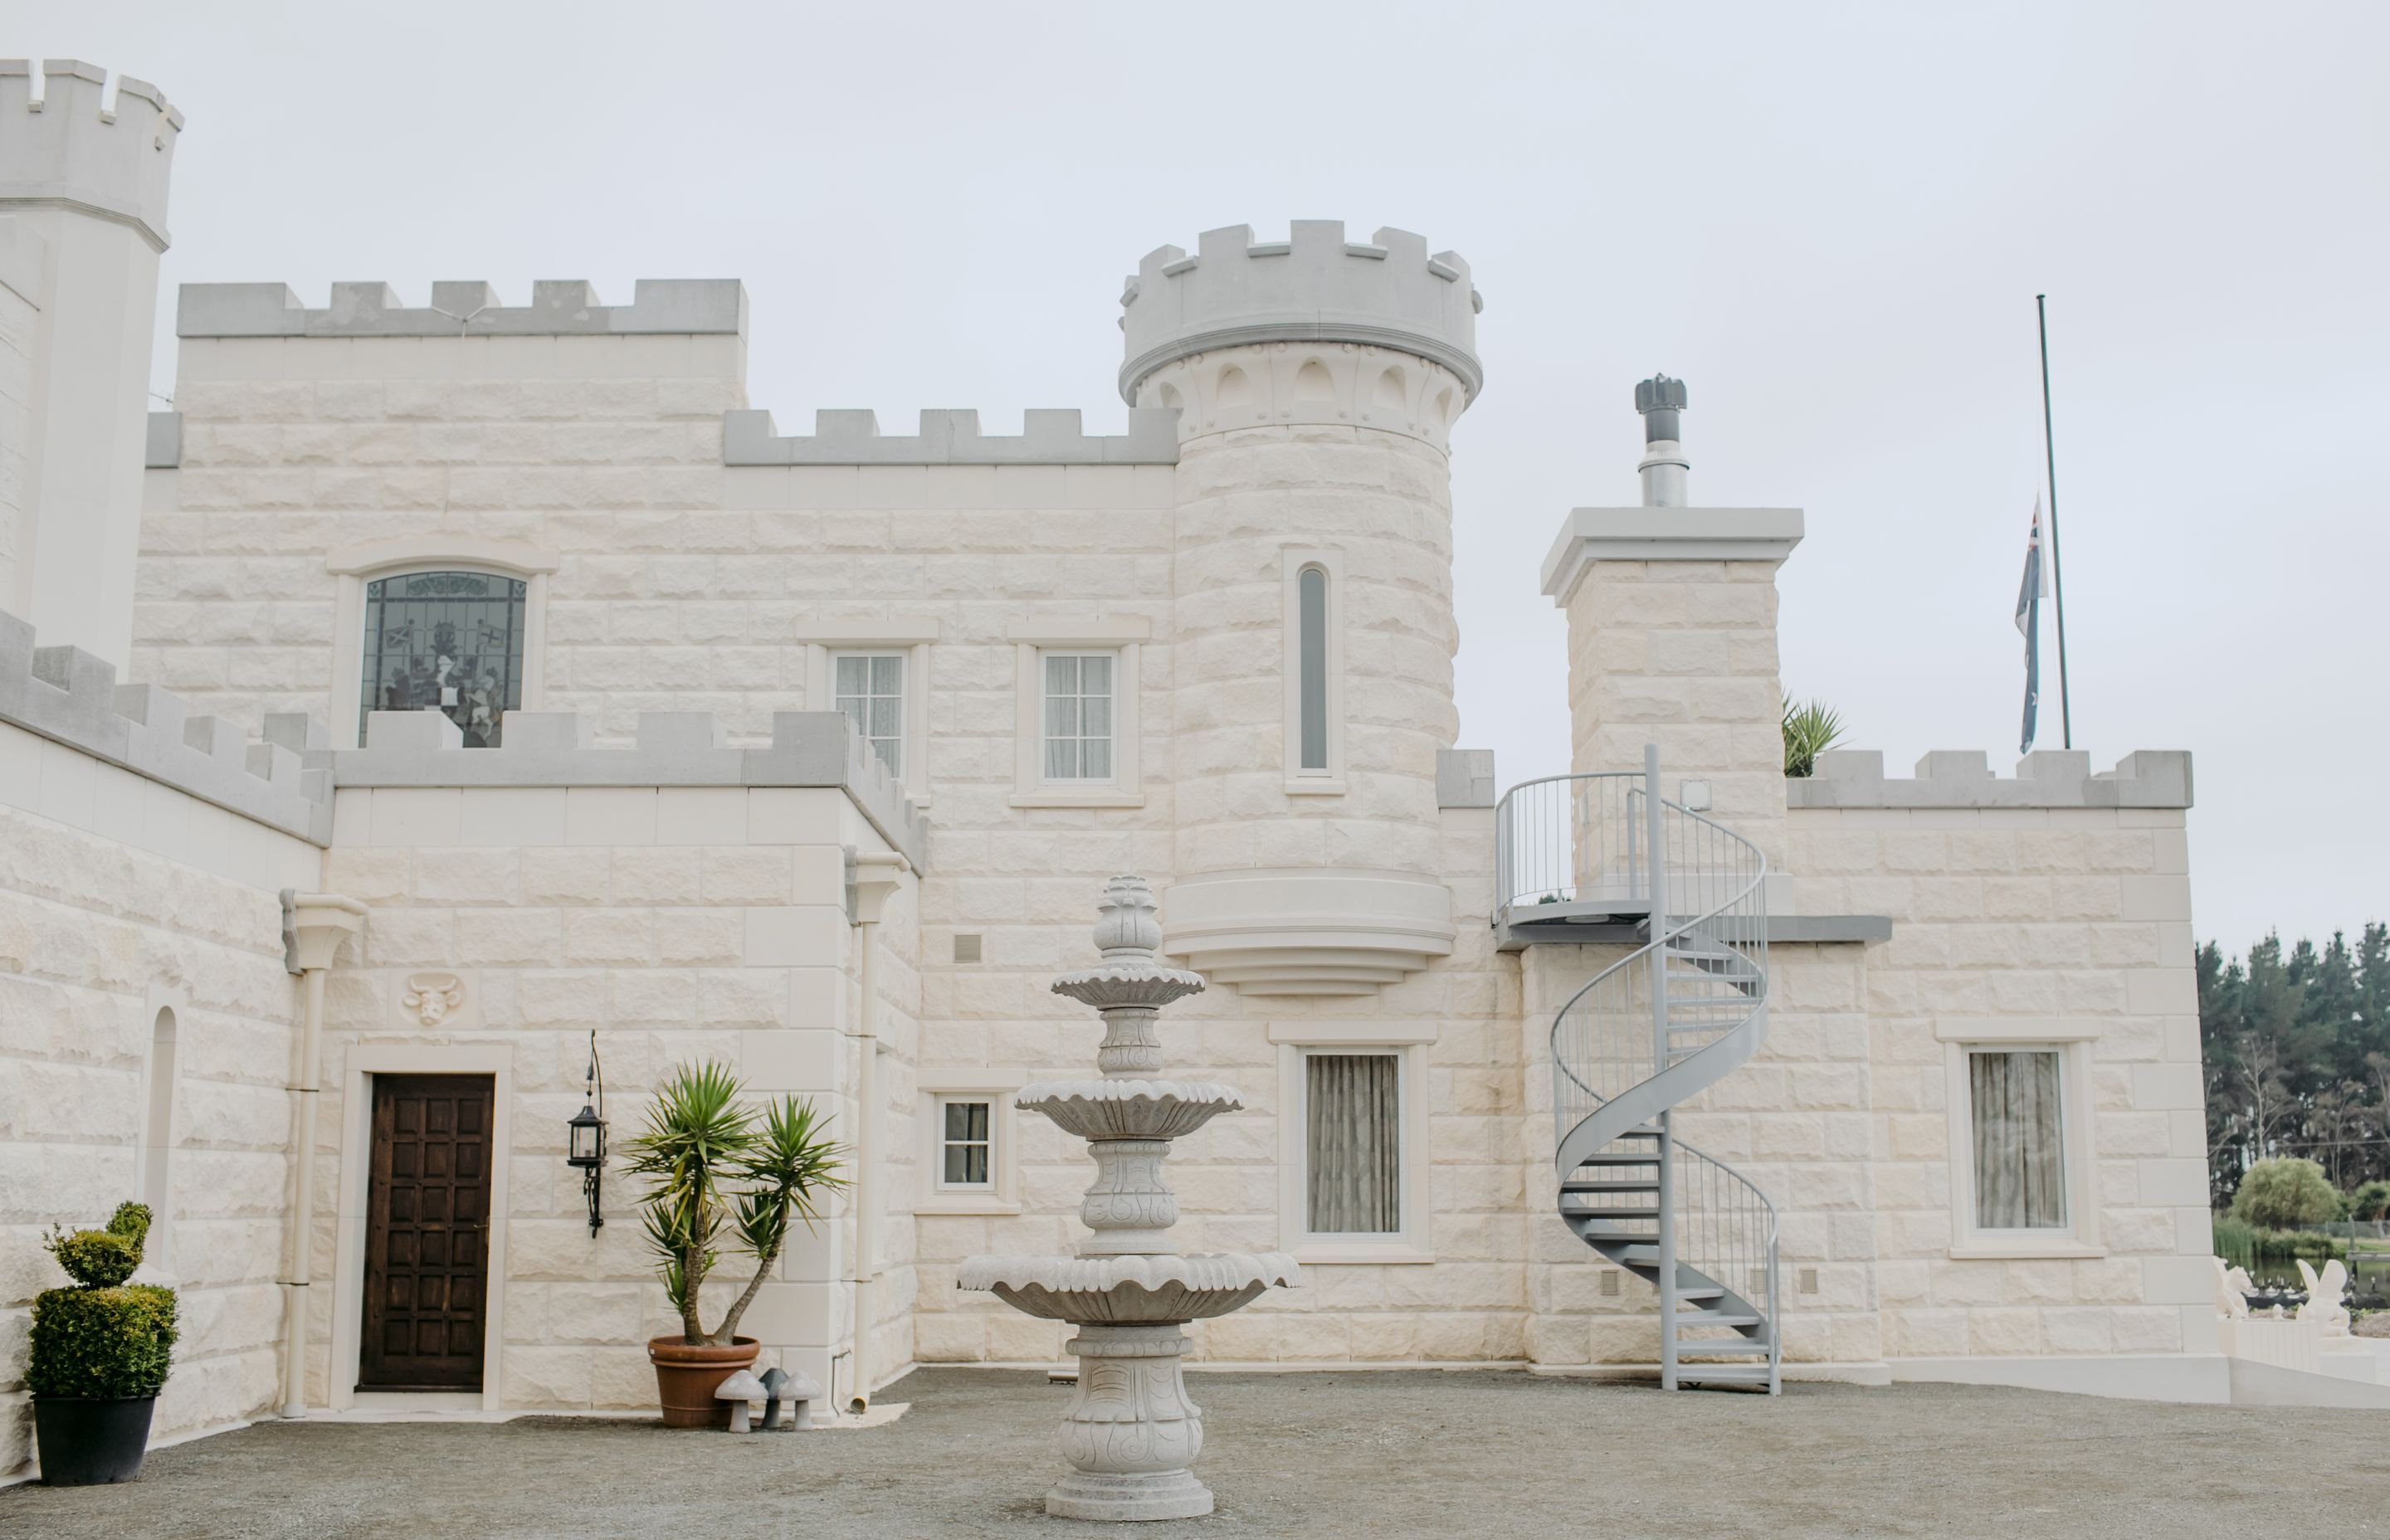 castle-corner-with-turrets.jpg